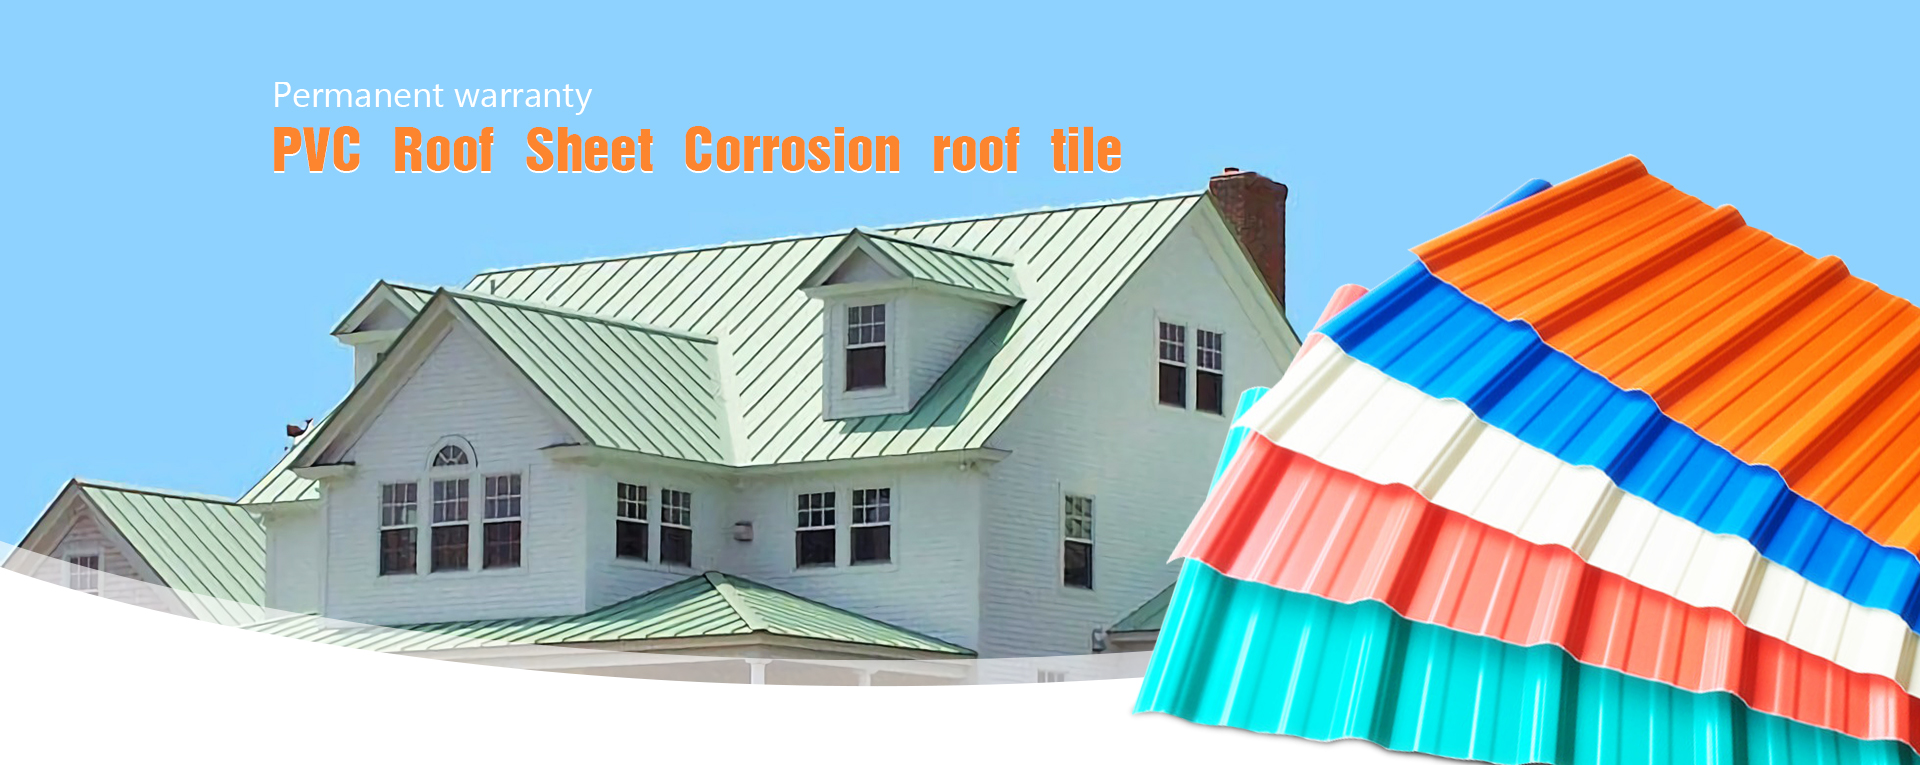 Pvc roof tile, PVC Roof Sheet, Plastic PVC Roof Tile - JX